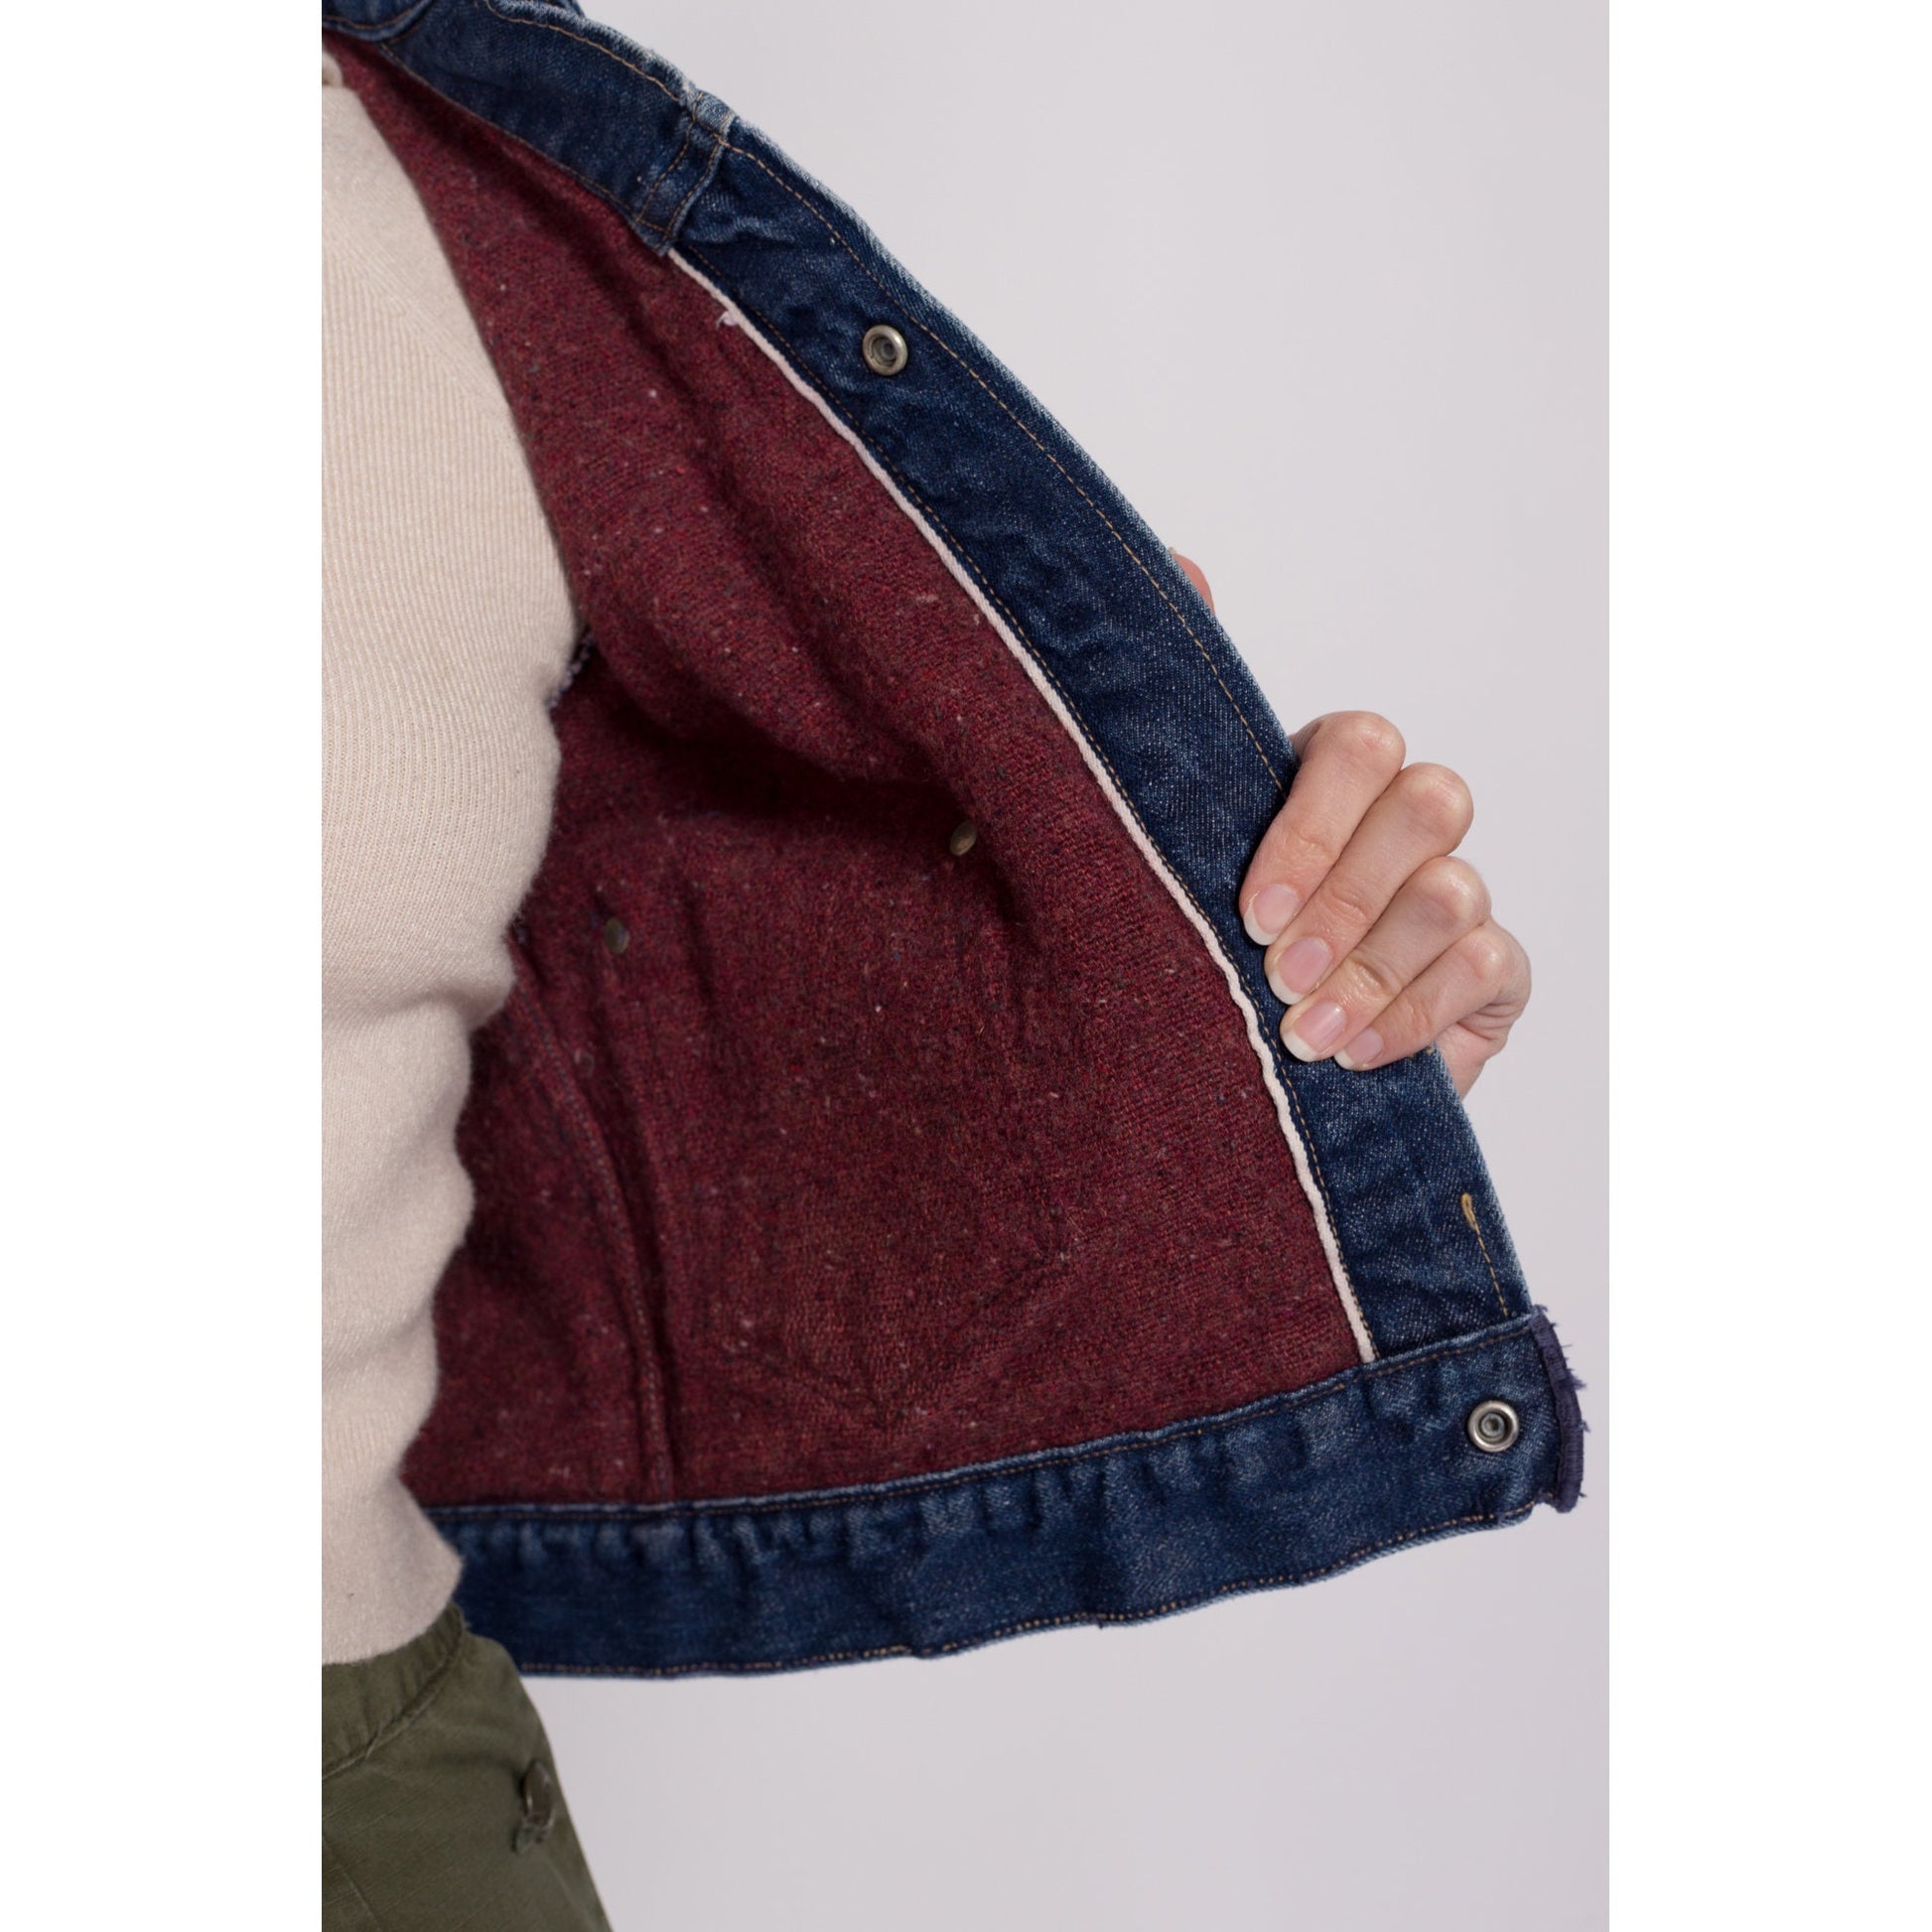 XS Vintage 50s JC Penney Foremost Selvedge Blanket Lined Jean Jacket | Rare 1950s Type 2 Dark Wash Denim Cropped Jacket